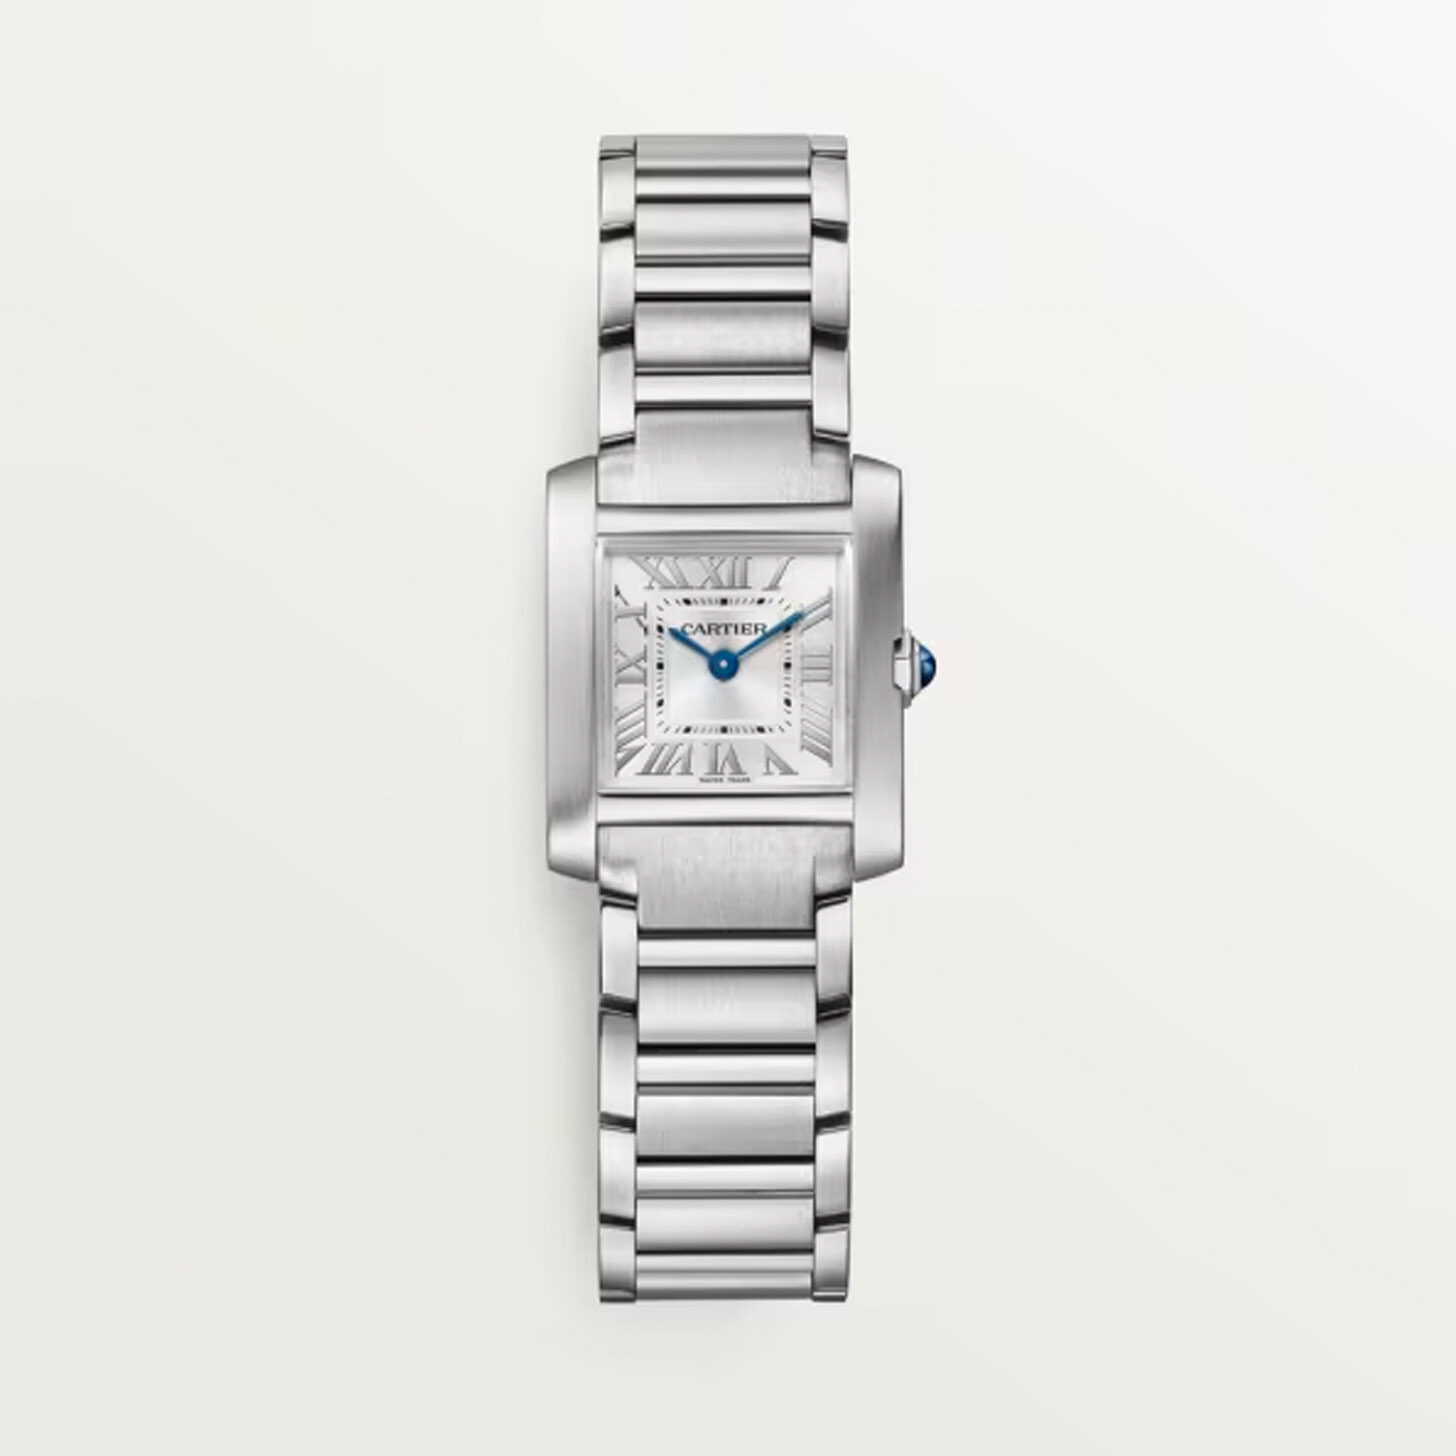 Cartier Tank Francaise腕錶